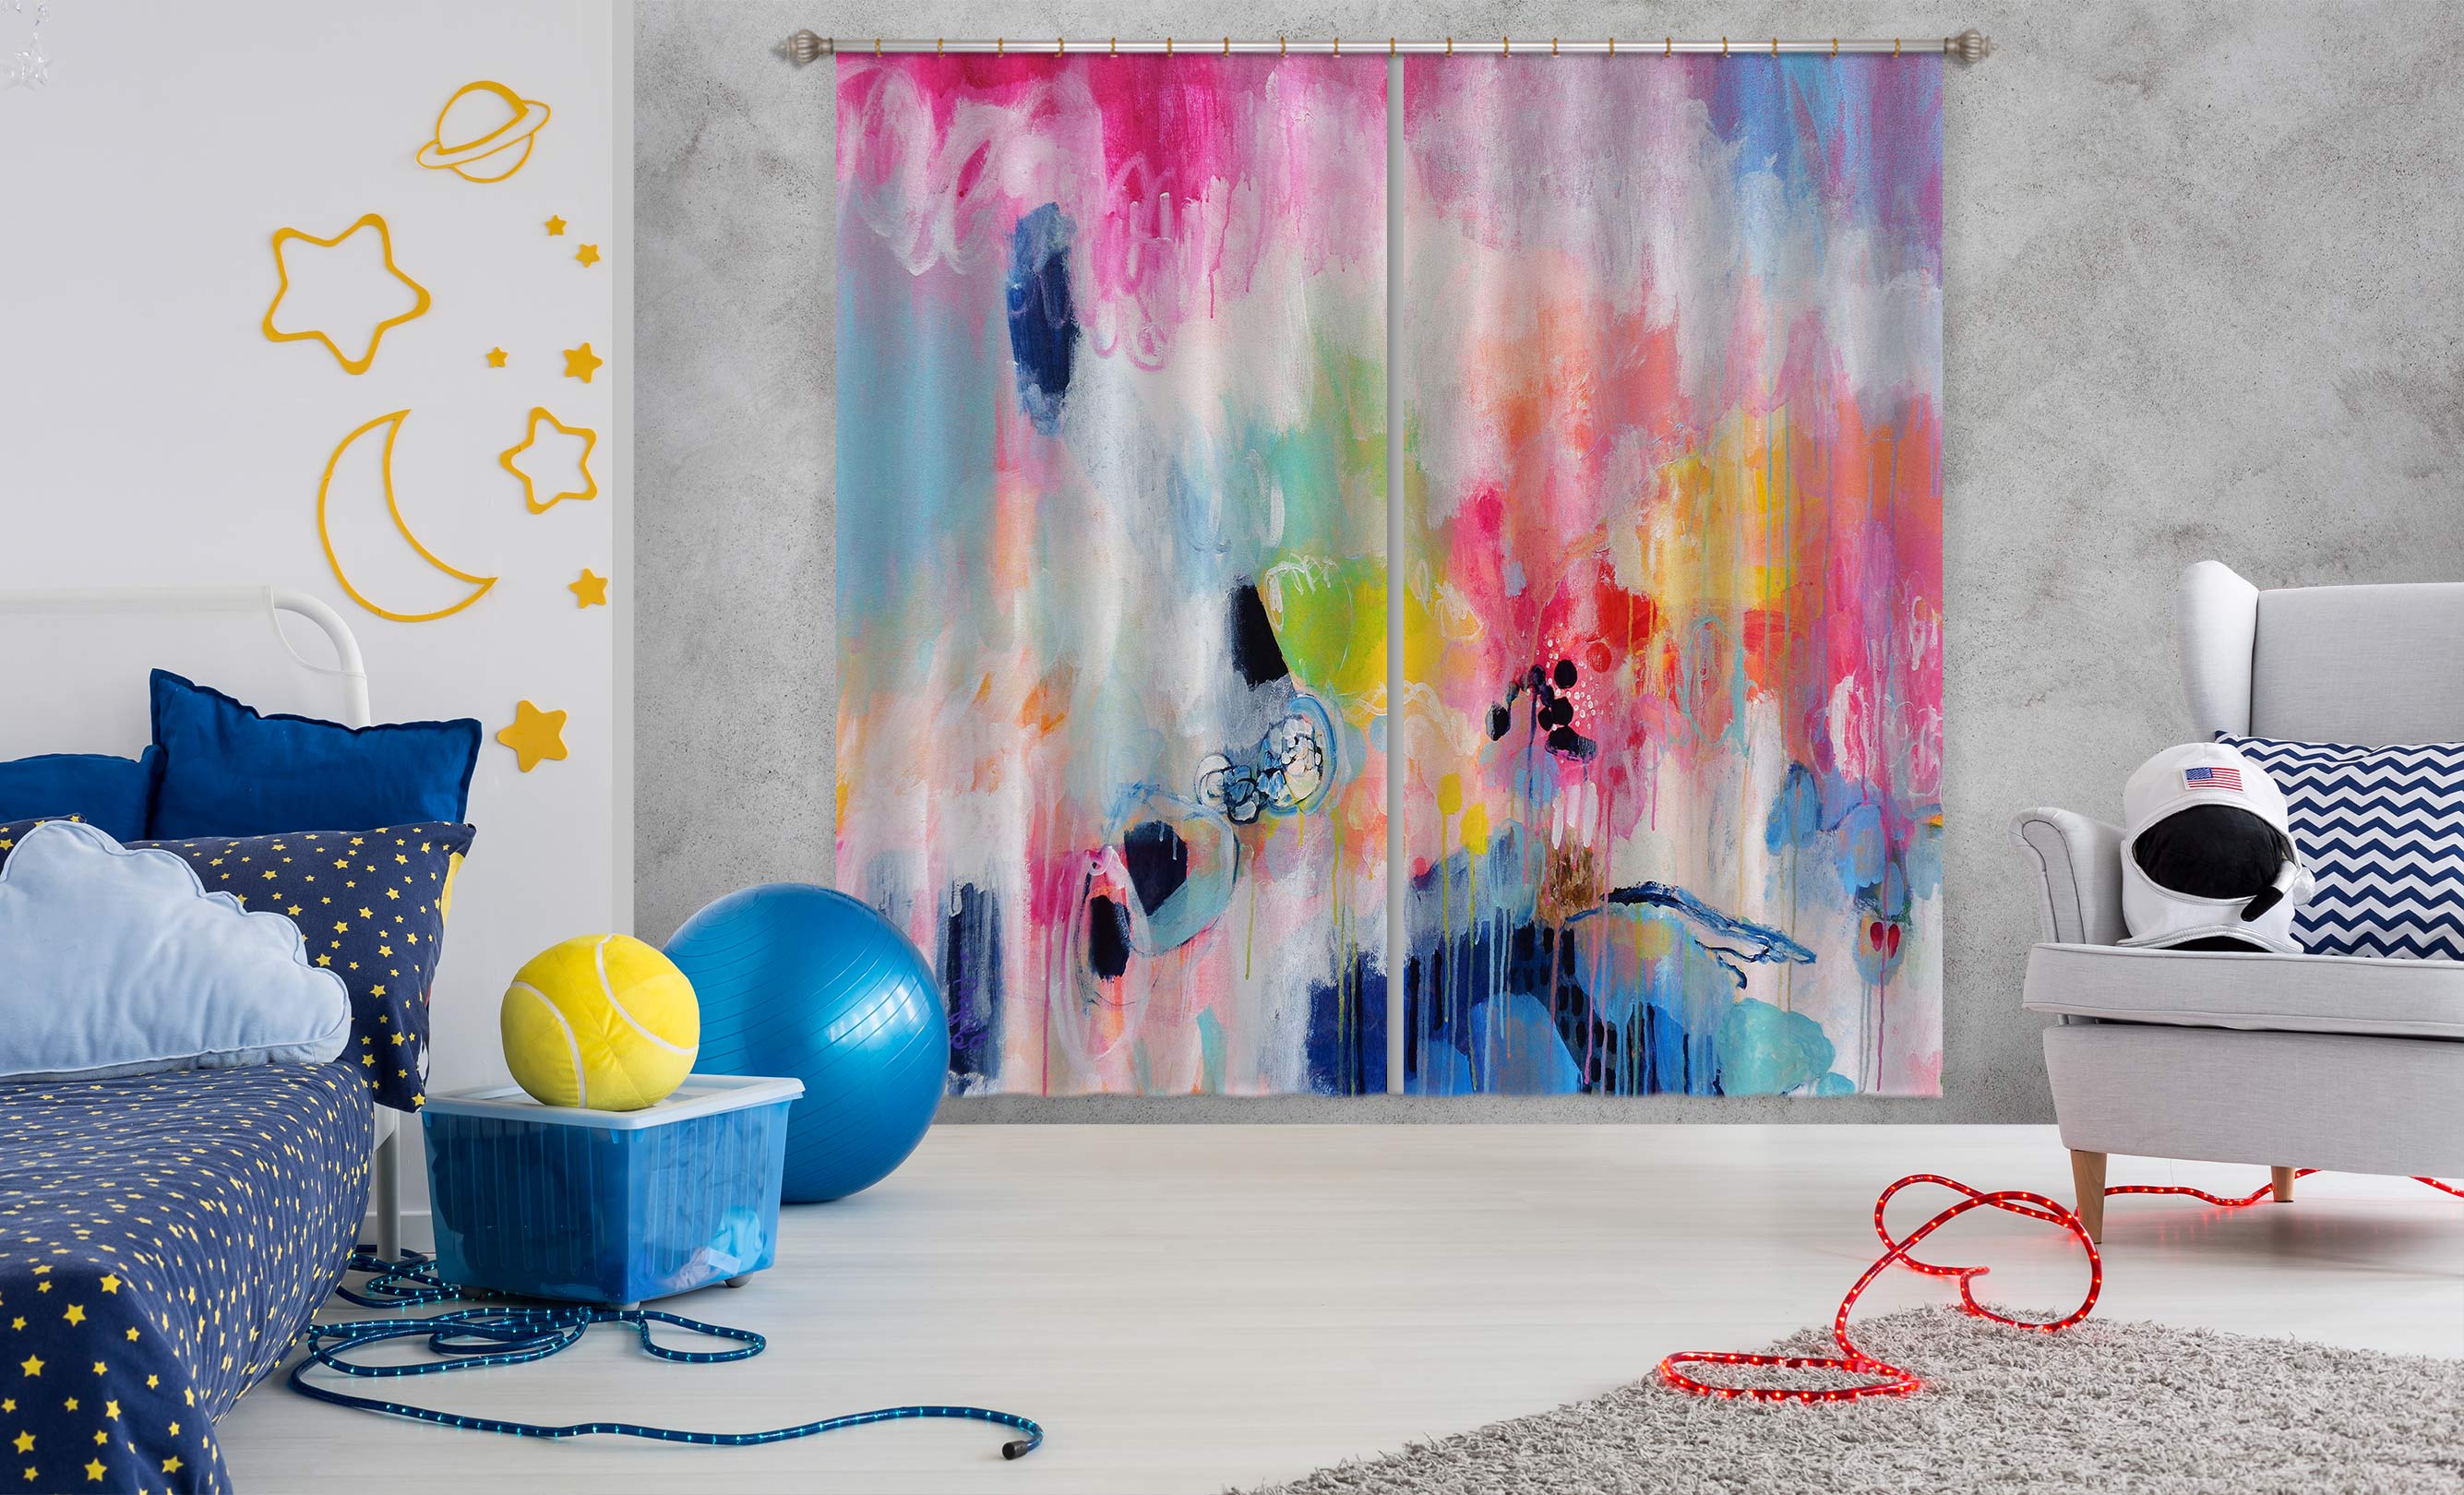 3D Color Painting 2402 Misako Chida Curtain Curtains Drapes